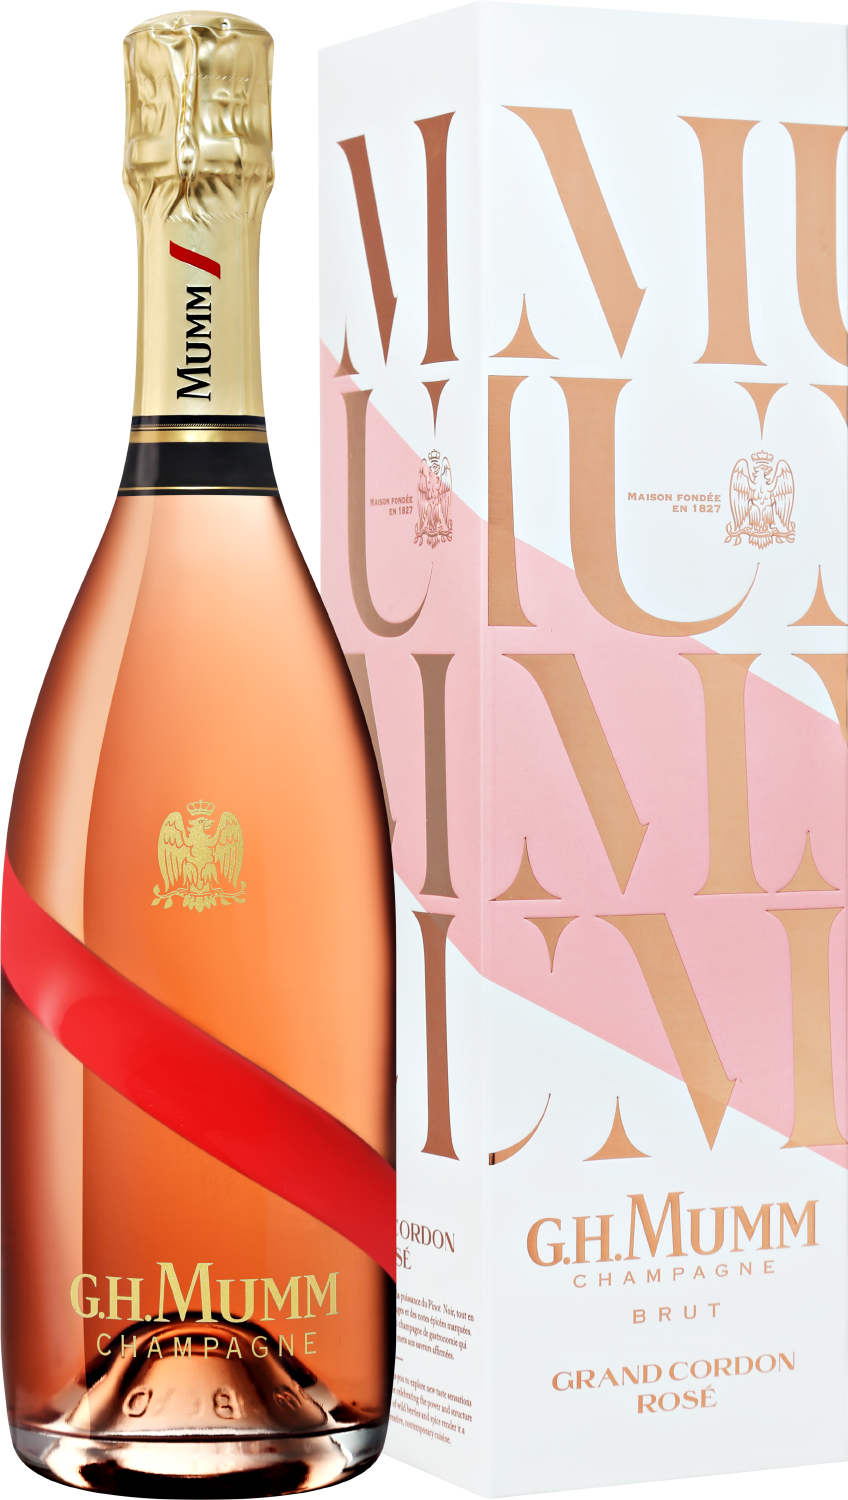 G.H. Mumm Grand Cordon Rose Champagne AOC Brut (gift box) mailly grand cru brut reserve champagne aoc gift box